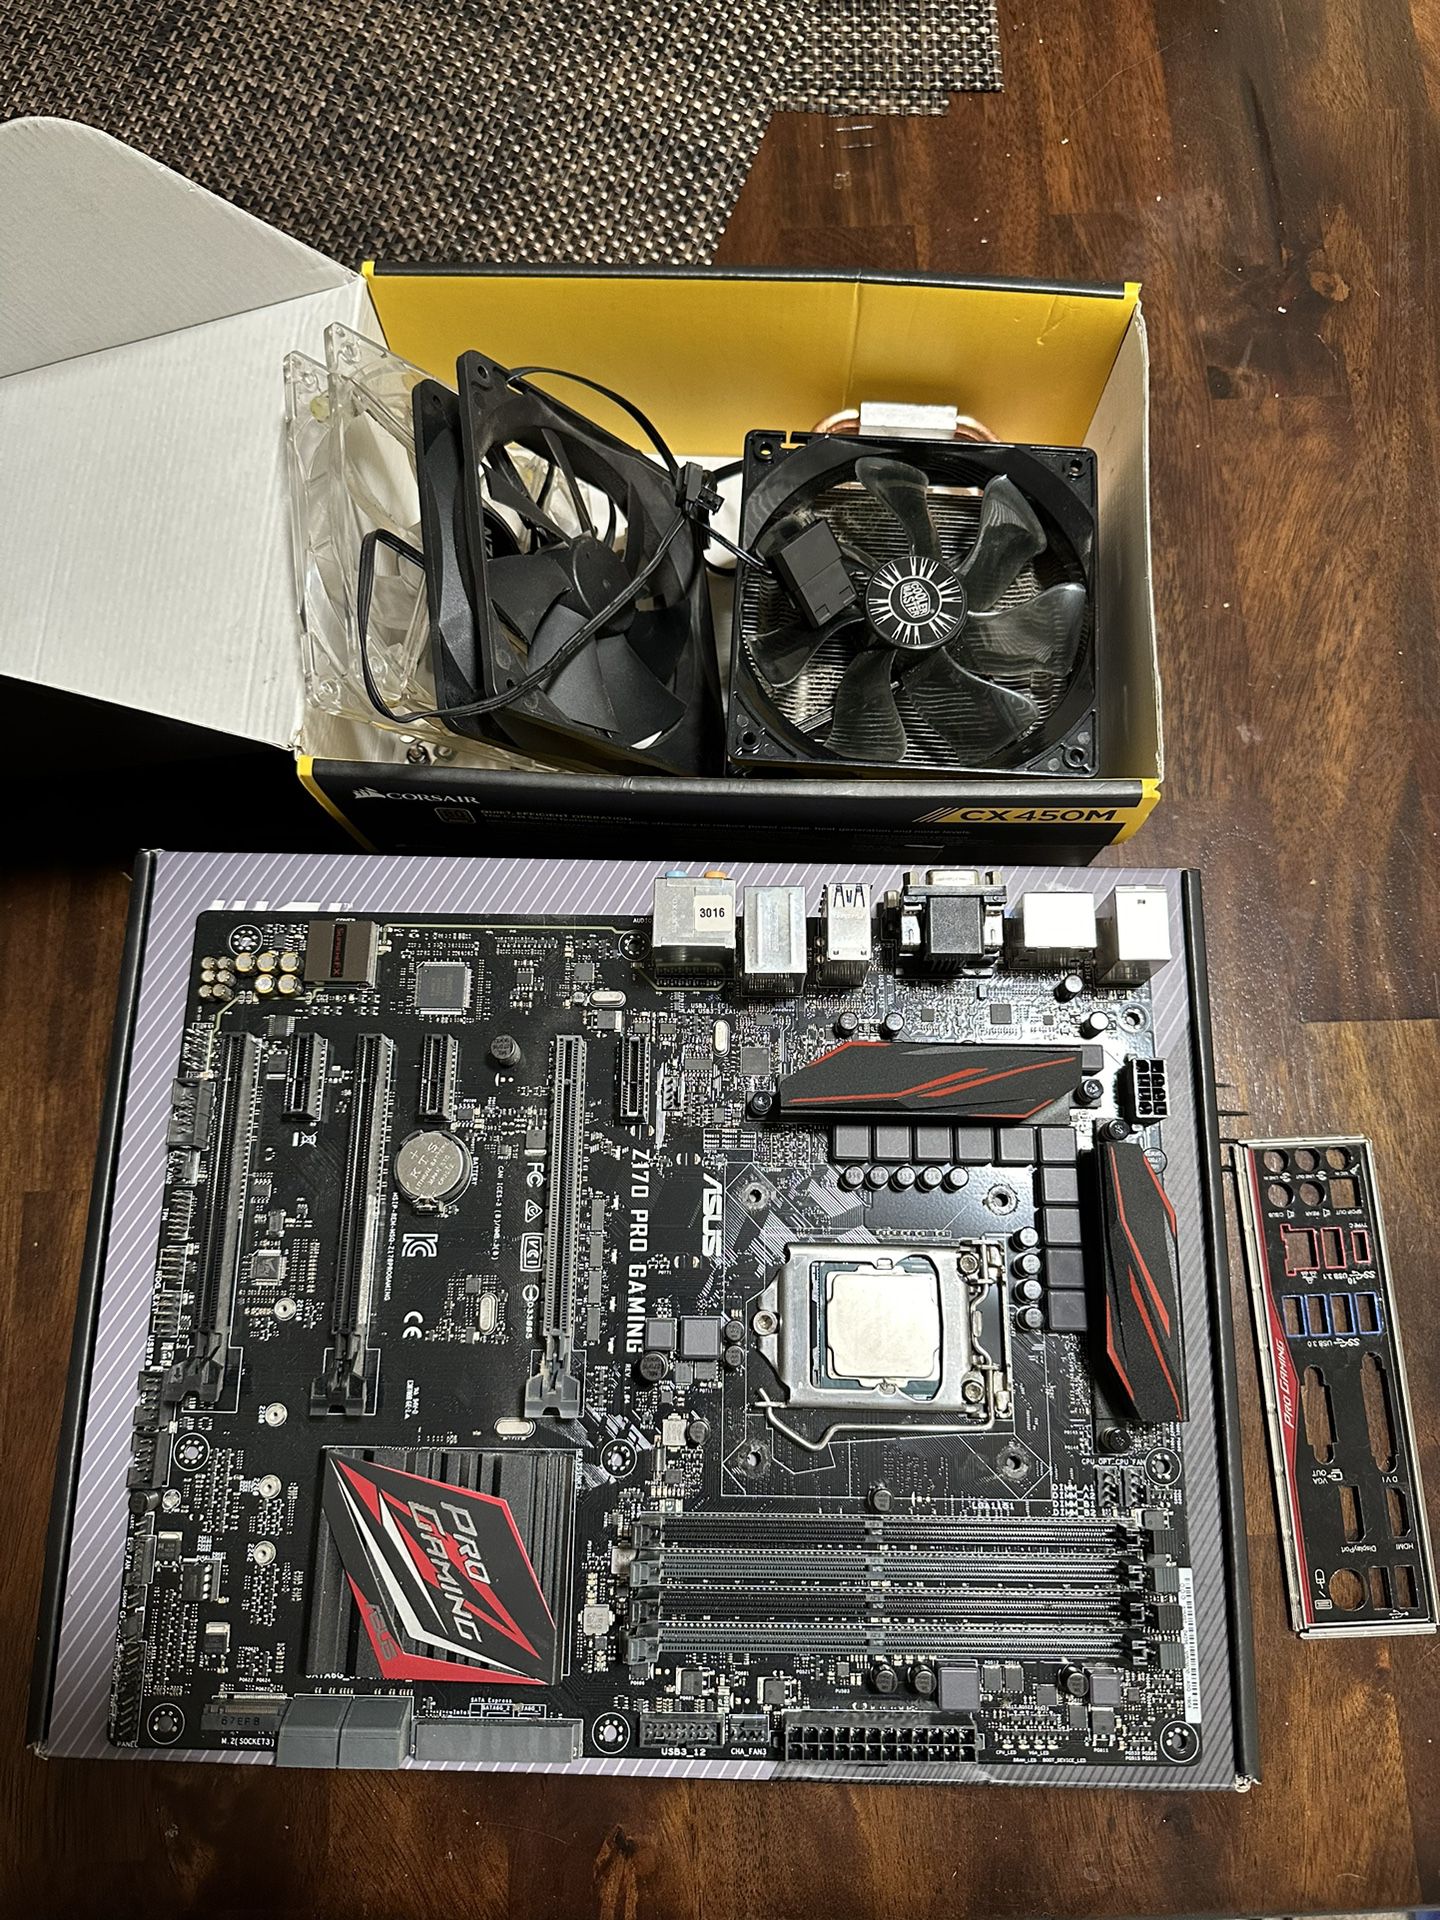 Used PC Parts: i5-7600k + Asus z170 Pro + Hyper 212 Heatsink